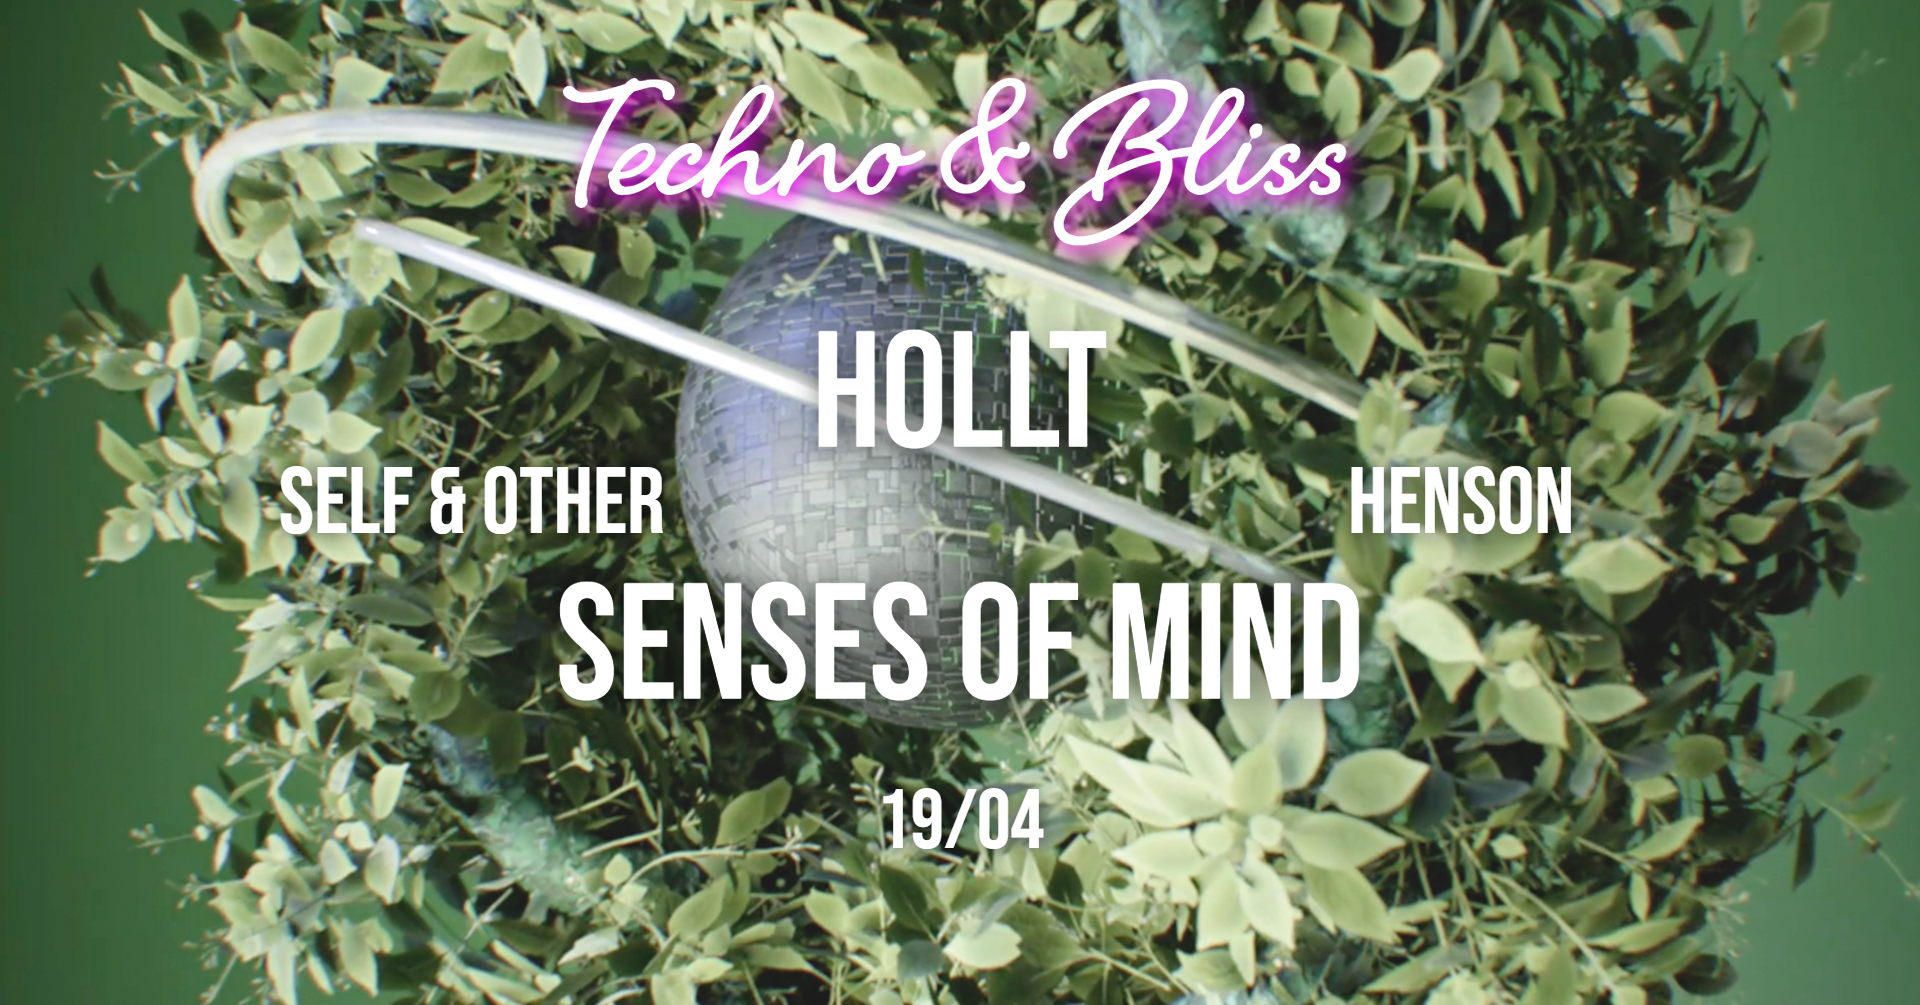 Techno & Bliss: Hollt - Senses Of Mind - Página frontal